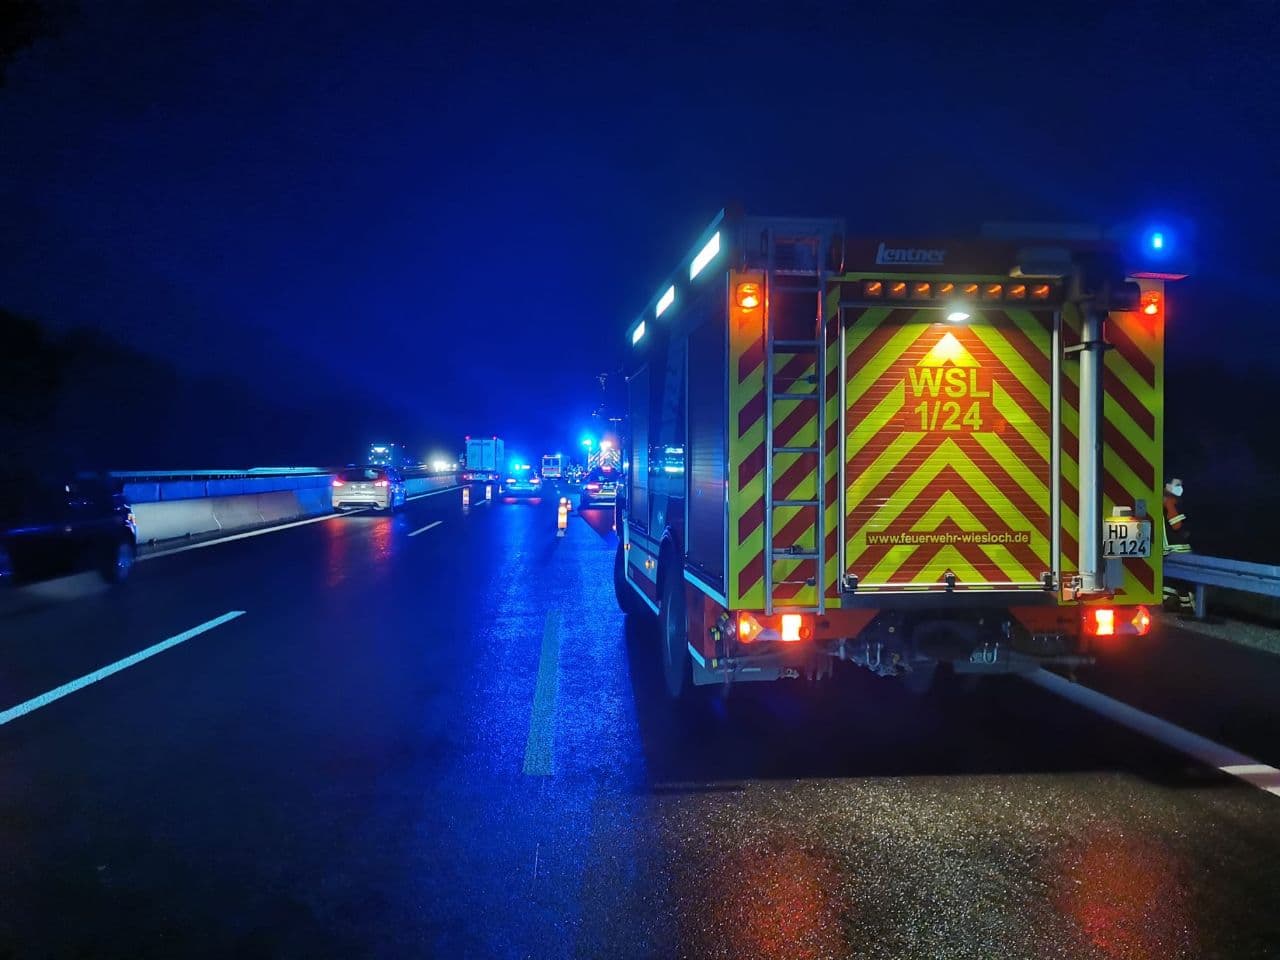 Autobahn 6: PKW kracht in Leitplanke – 3 PKW beteiligt – 4 verletzte Personen